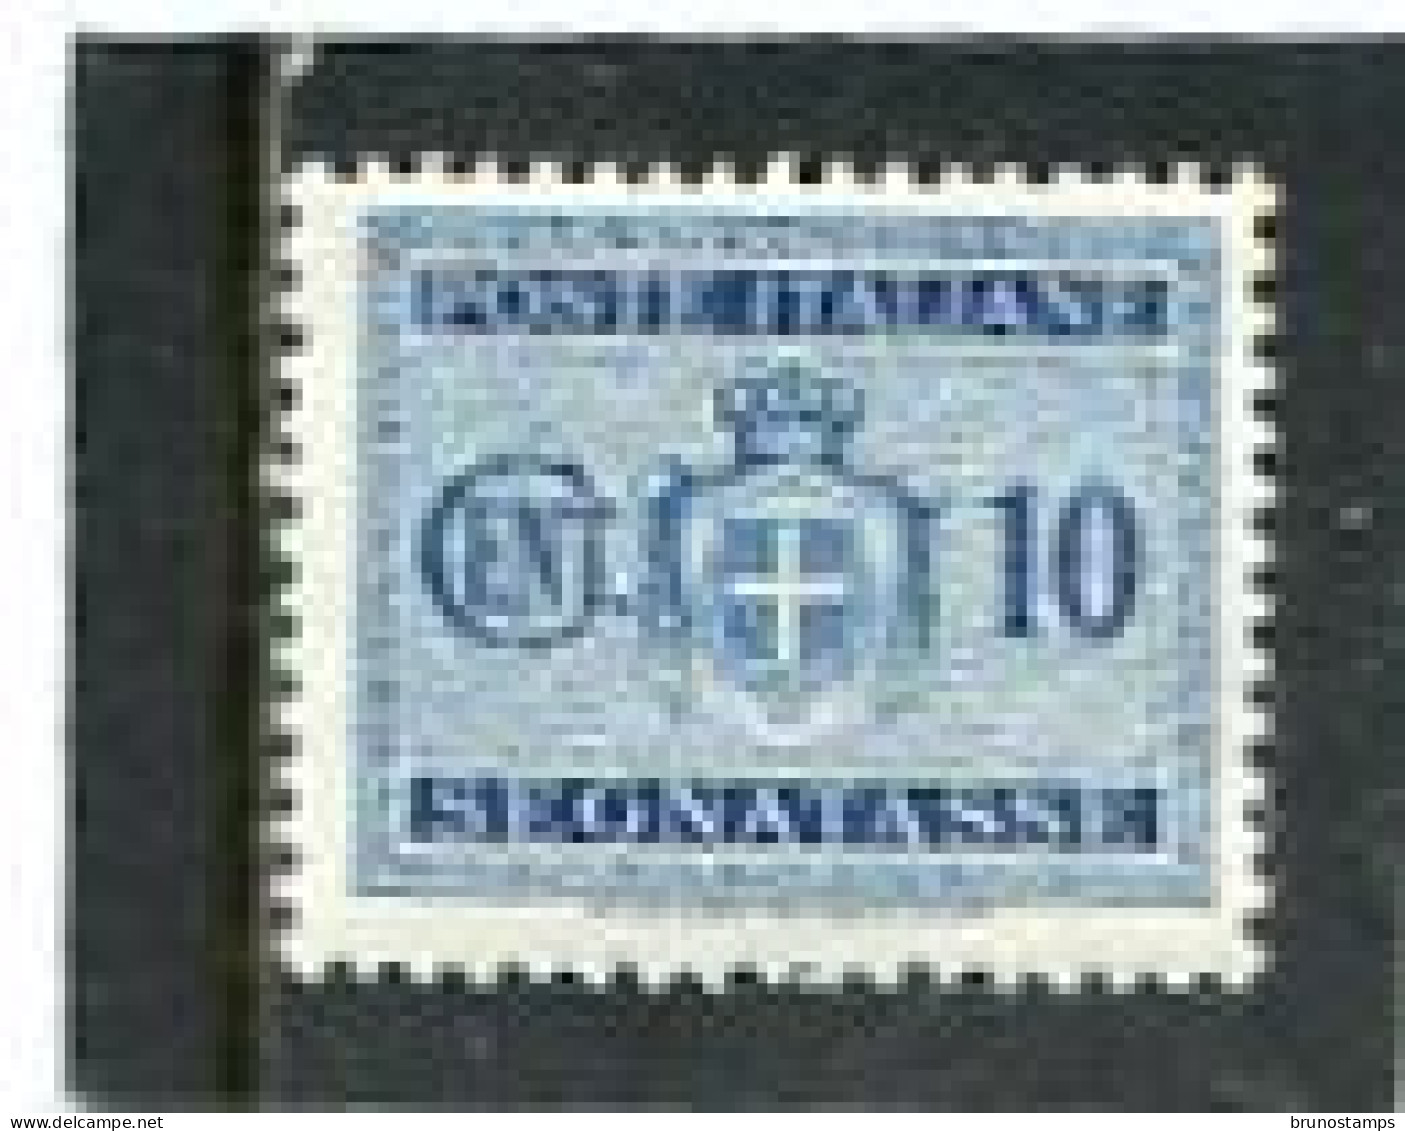 ITALIA - 1945  POSTAGE DUE  10c  WMK  MINT NH - Taxe